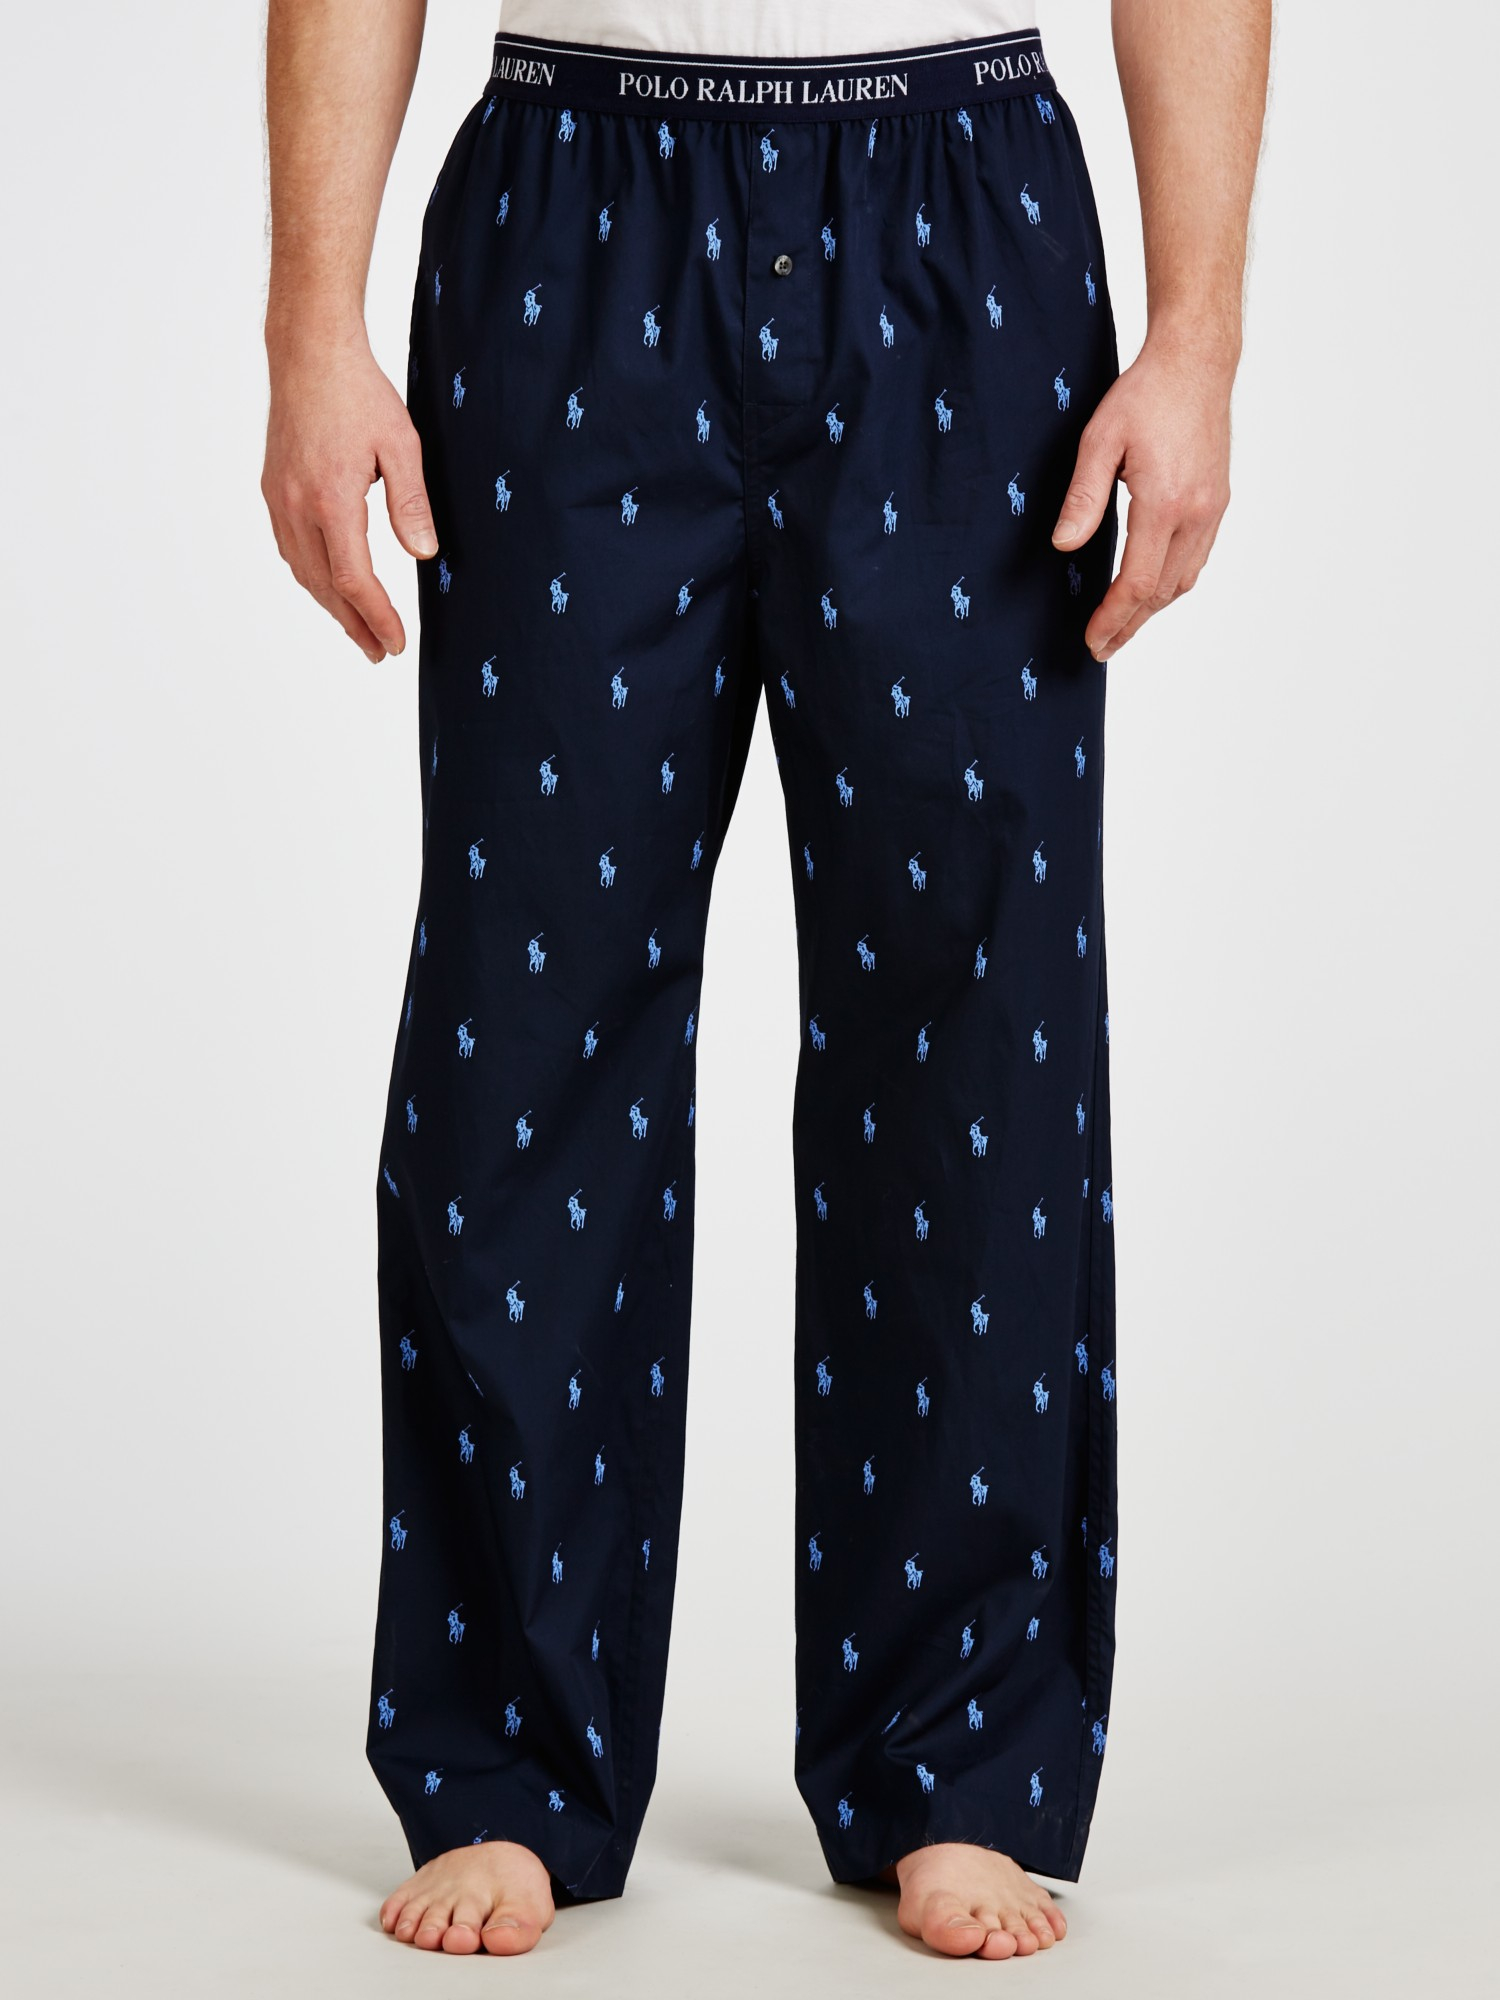 Polo Ralph Lauren Pony Print Lounge Pants in Navy (Blue) for Men - Lyst